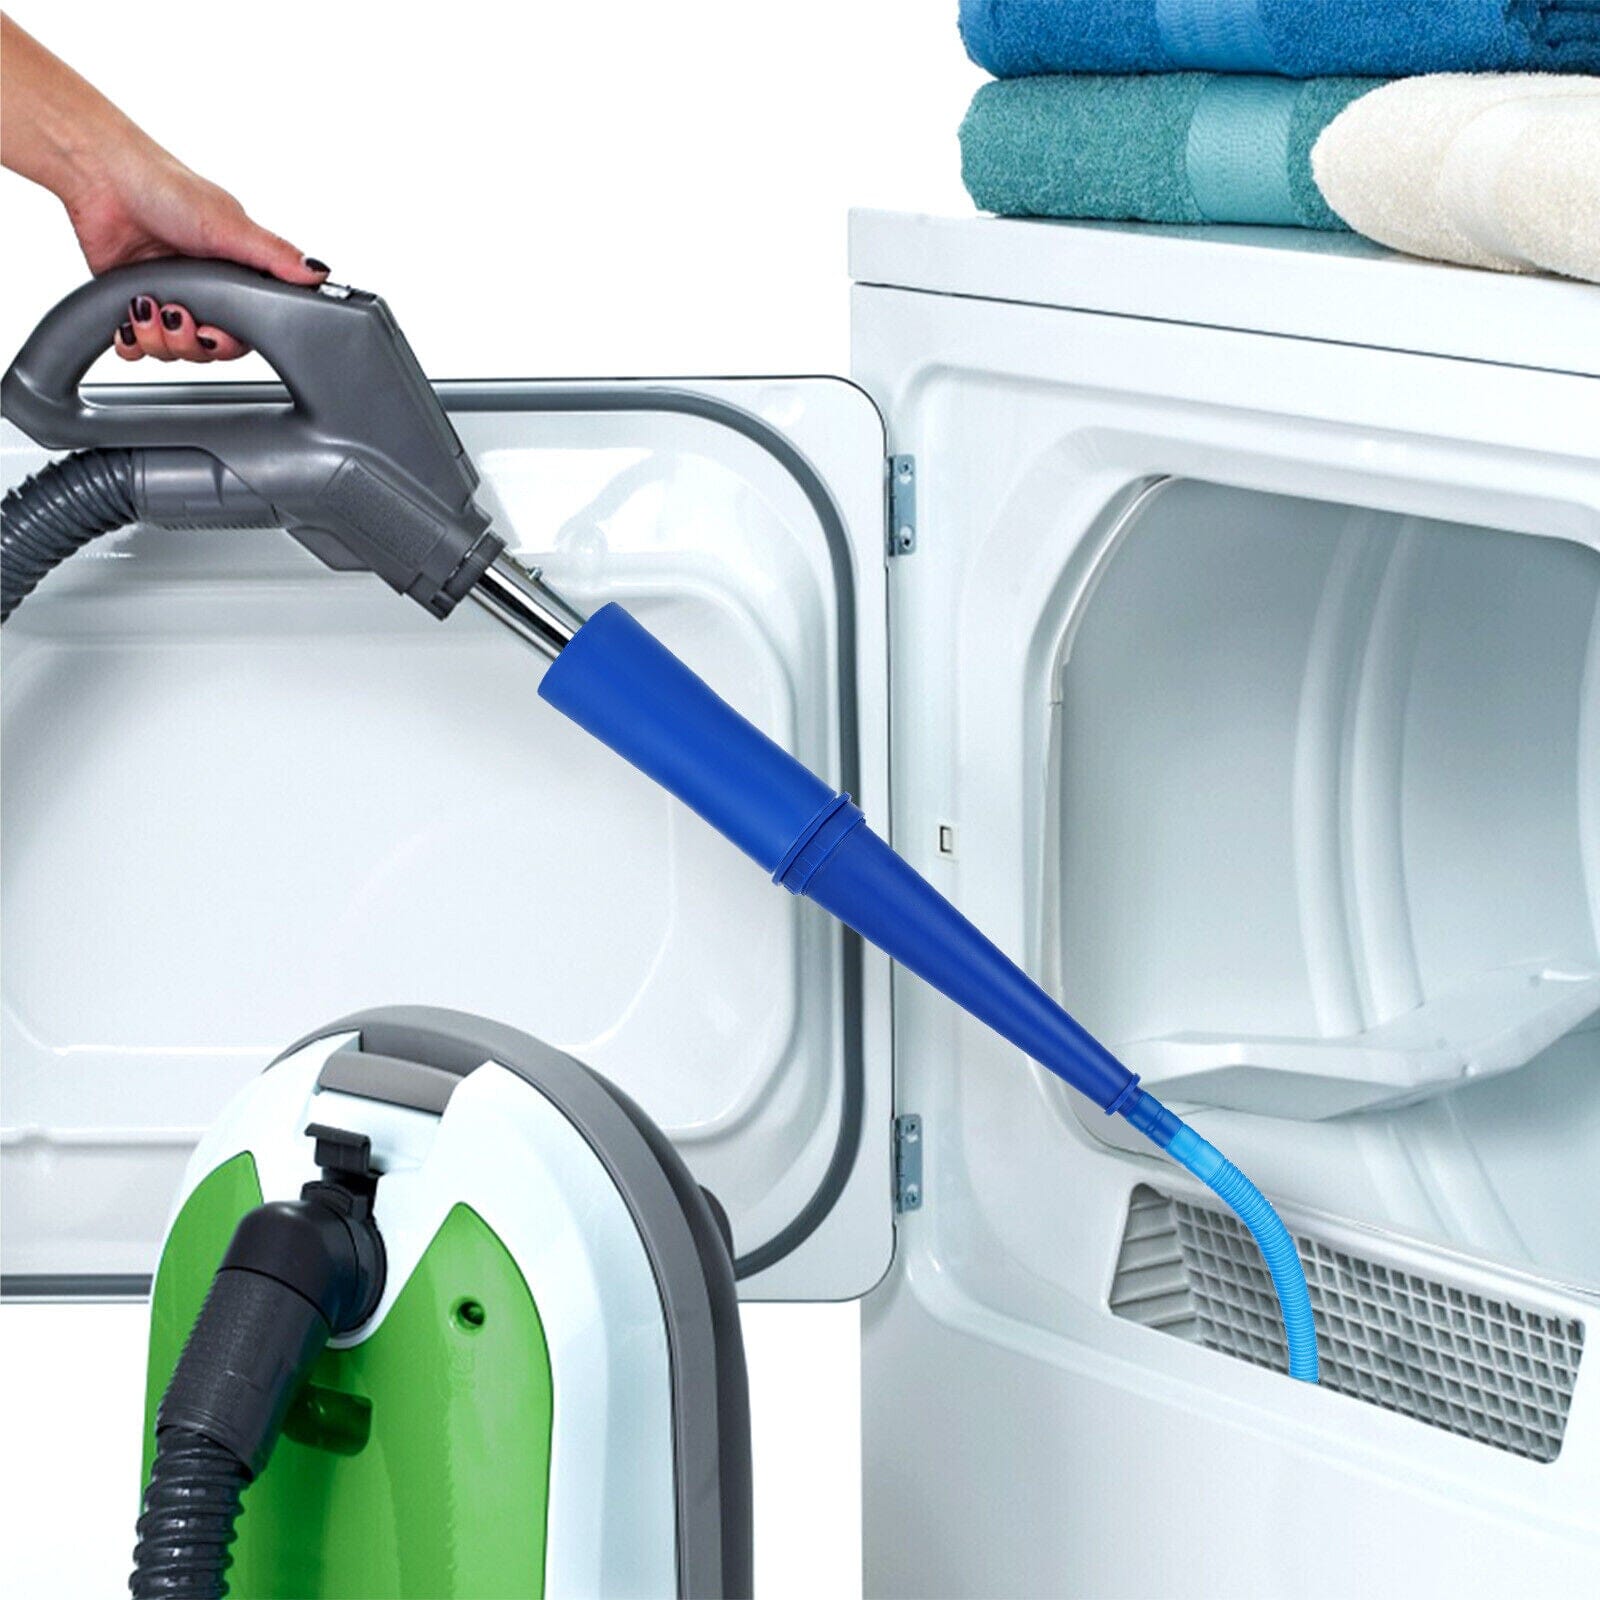 Dropship 1pc Dryer Vent Cleaner Kit Lint Remover Brush, Dryer Lint